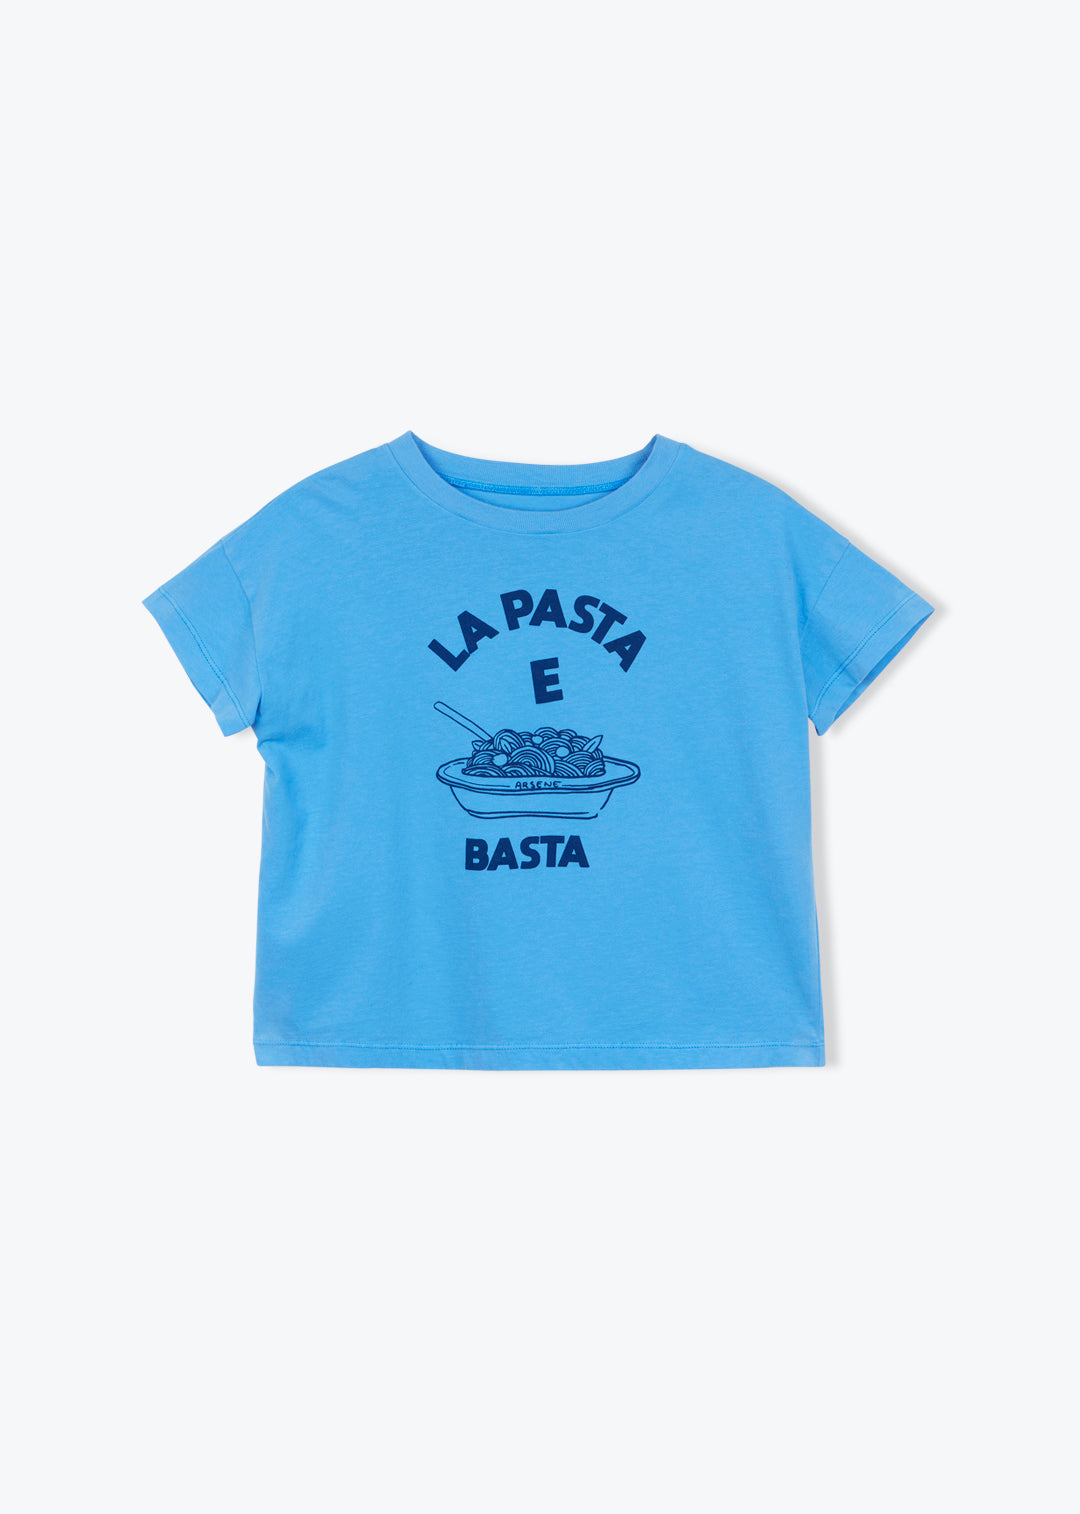 T-Shirt Boy Pasta E Basta Blue Fabrizio - قميص